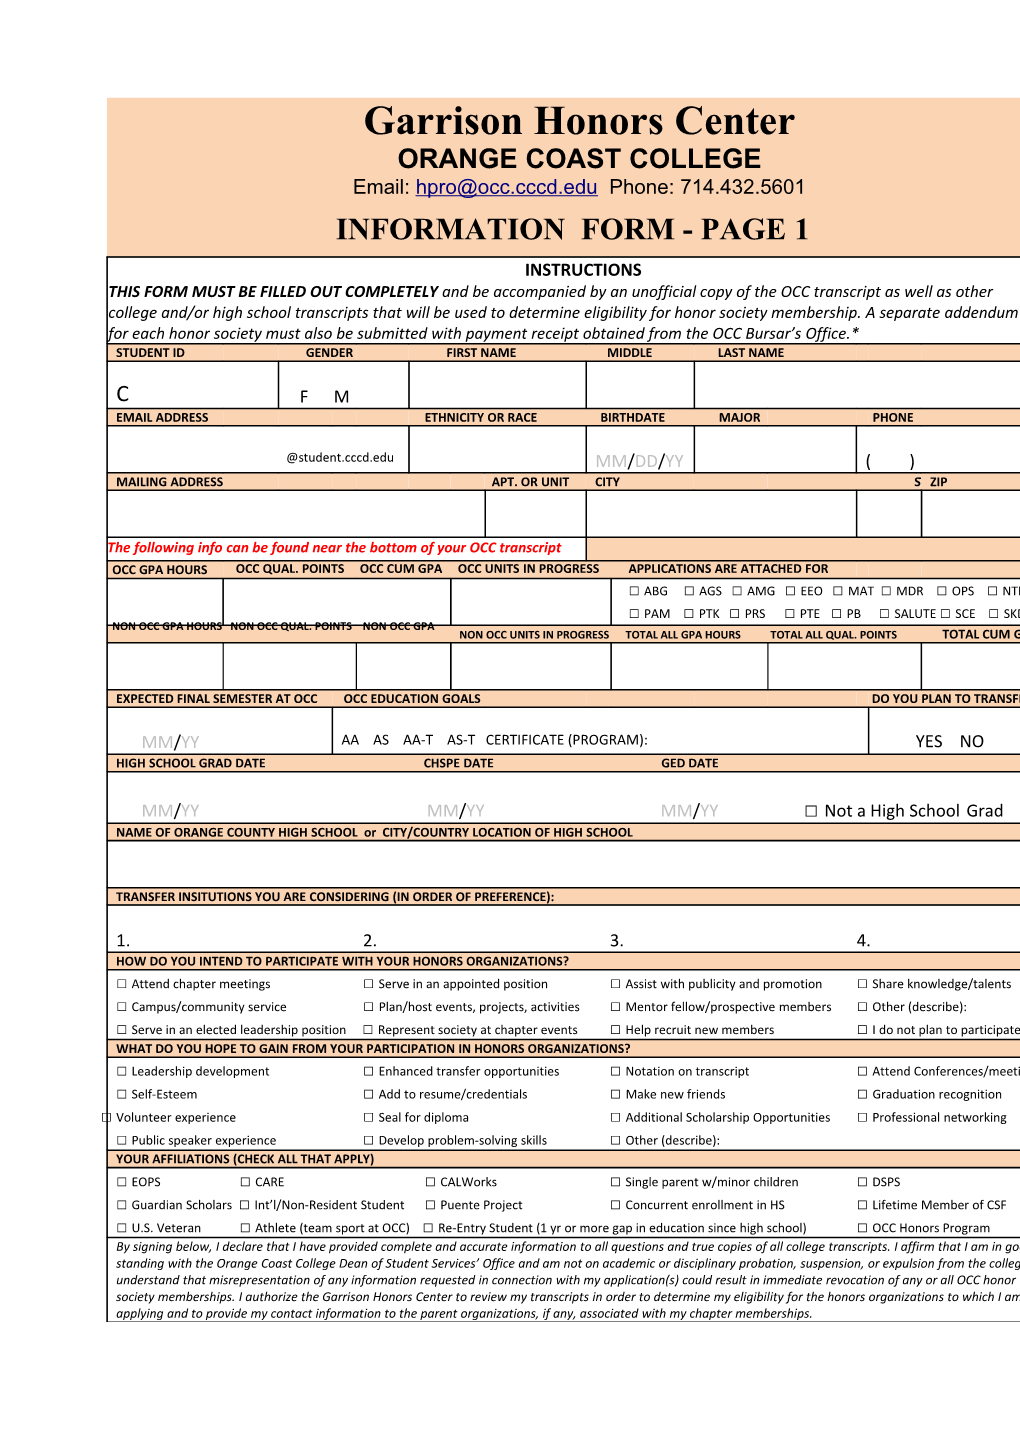 General Info Form 2017-18